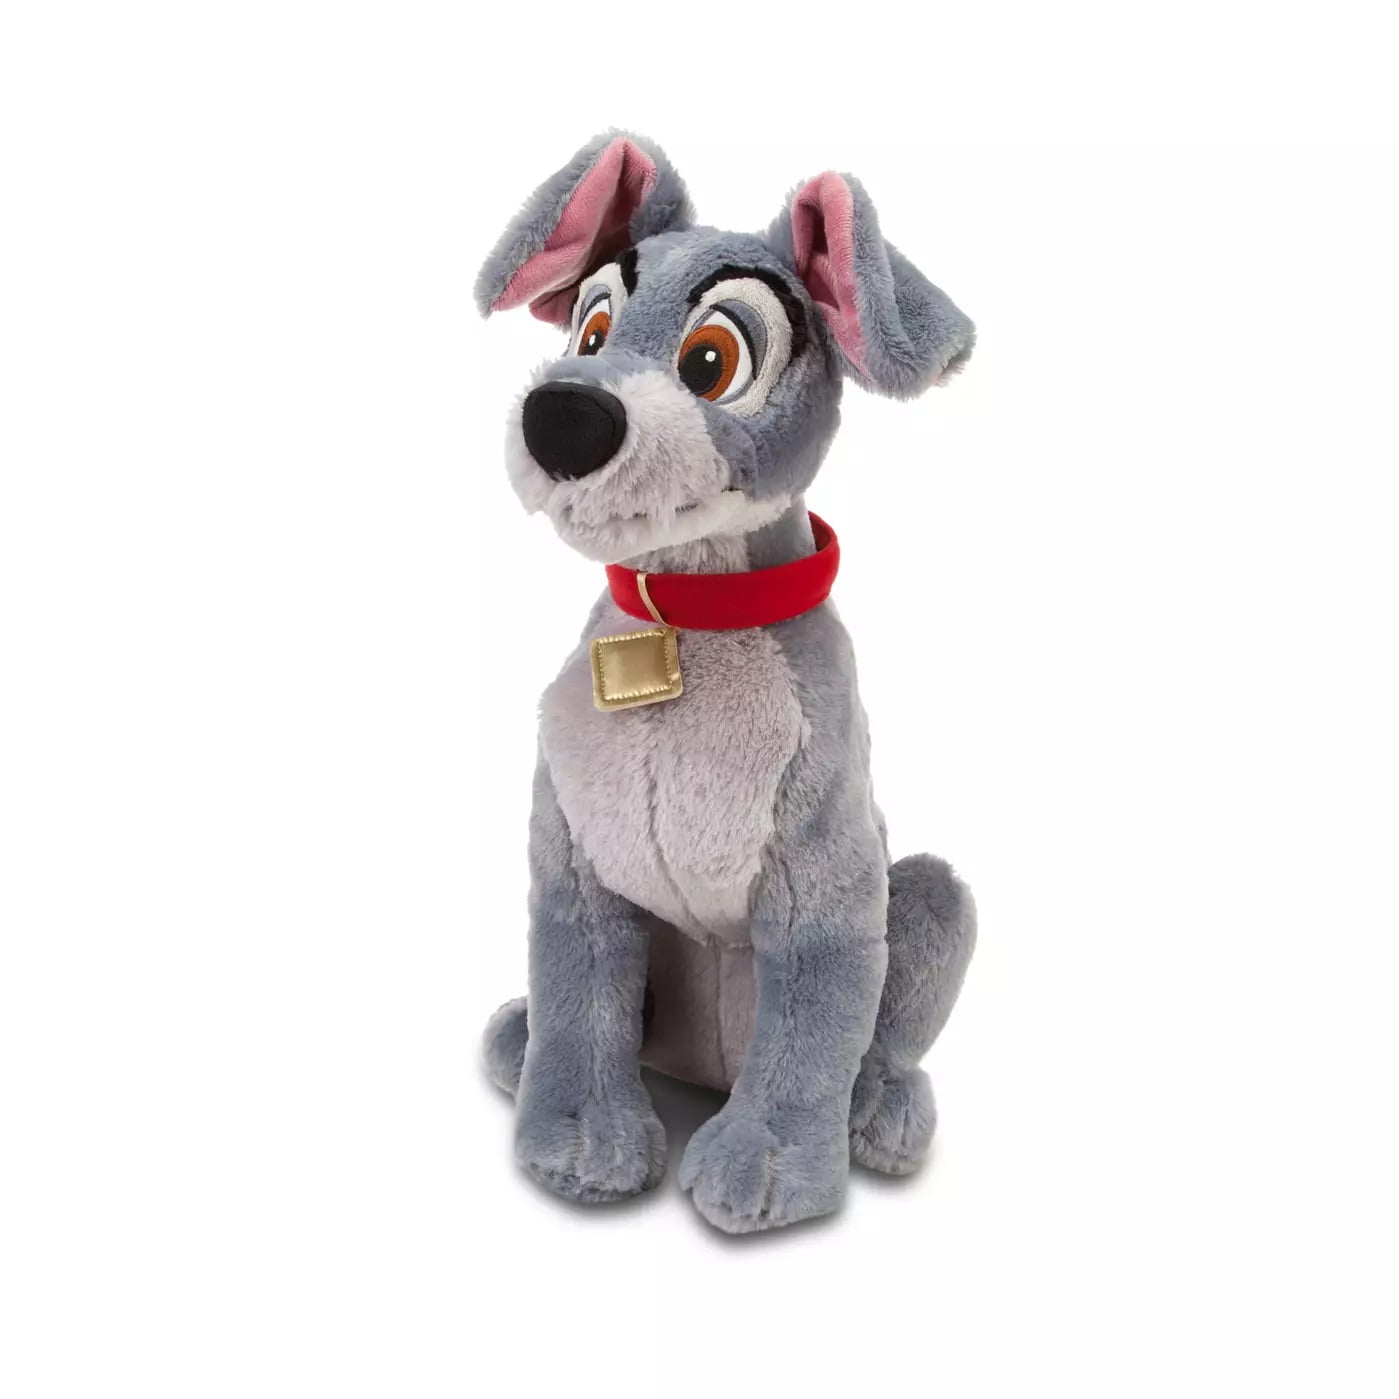 BNWT Disney Store 12" Soft Plush LADY Dog Lady & The Tramp Doll Toy 